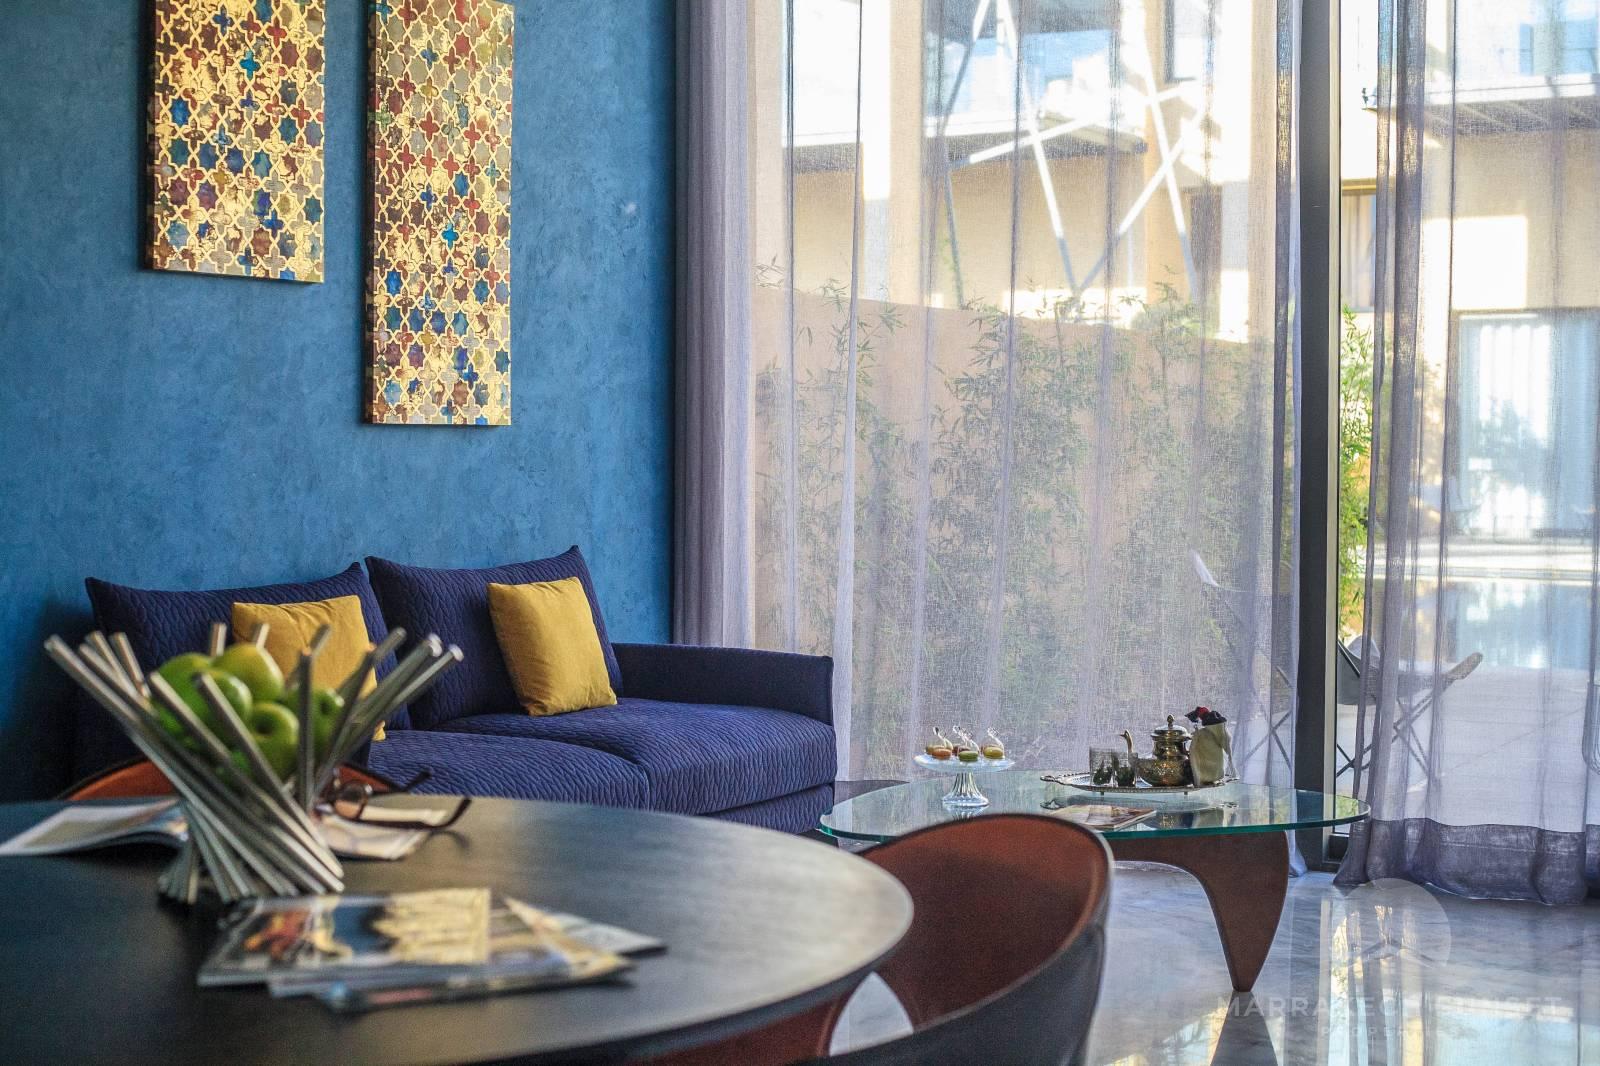  Luxury 2 bedroom Loft apartment for sale in Marrakech 